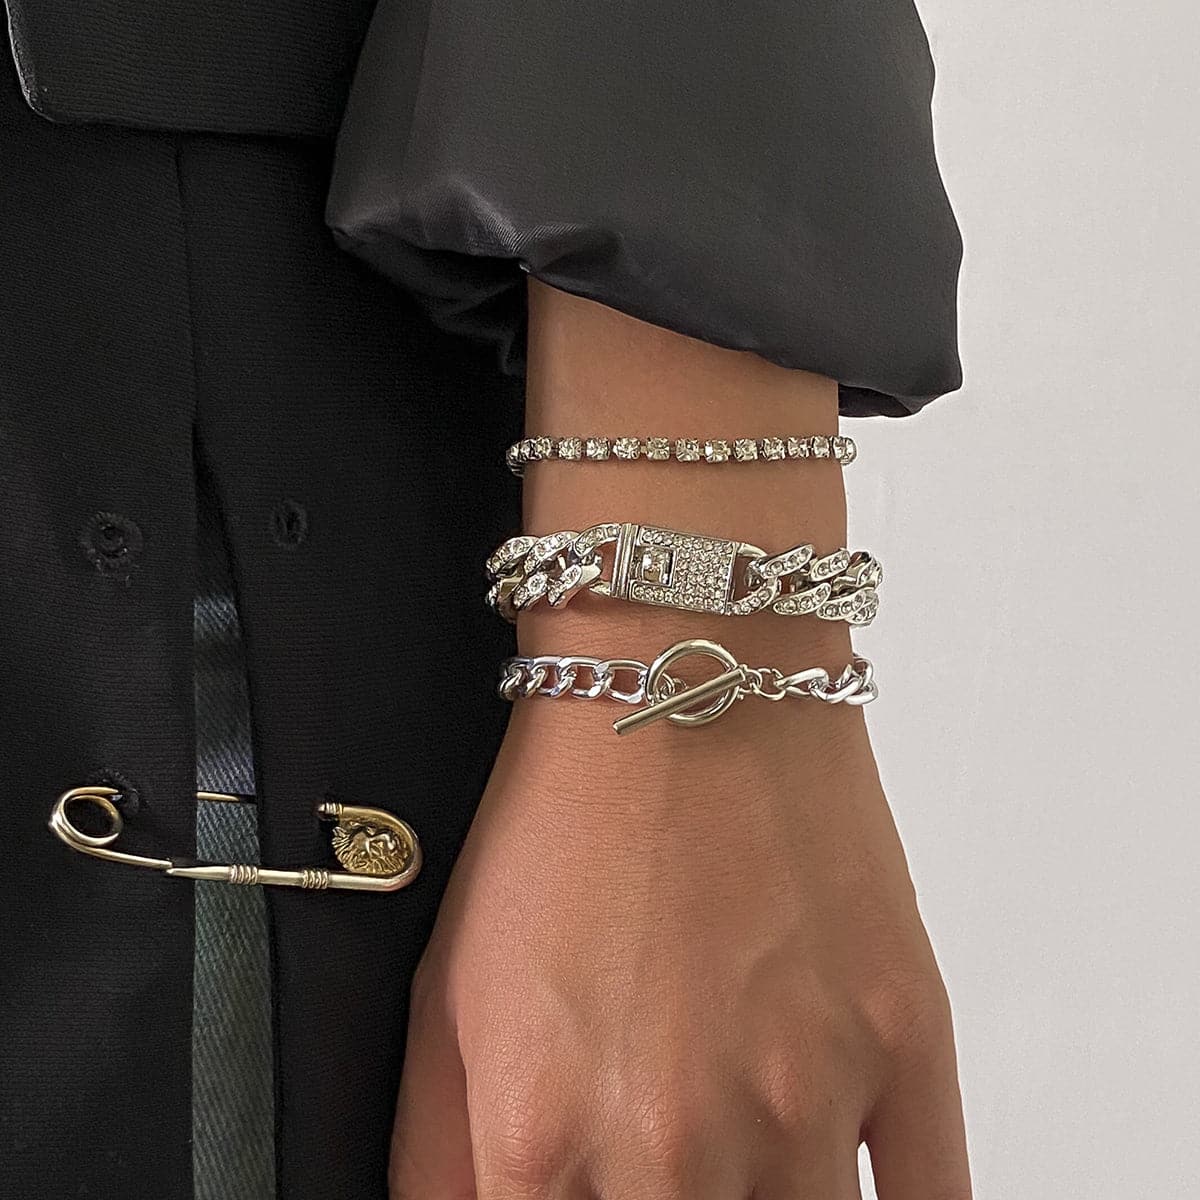 Cubic Zirconia & Silver-Plated Lock Bracelet Set